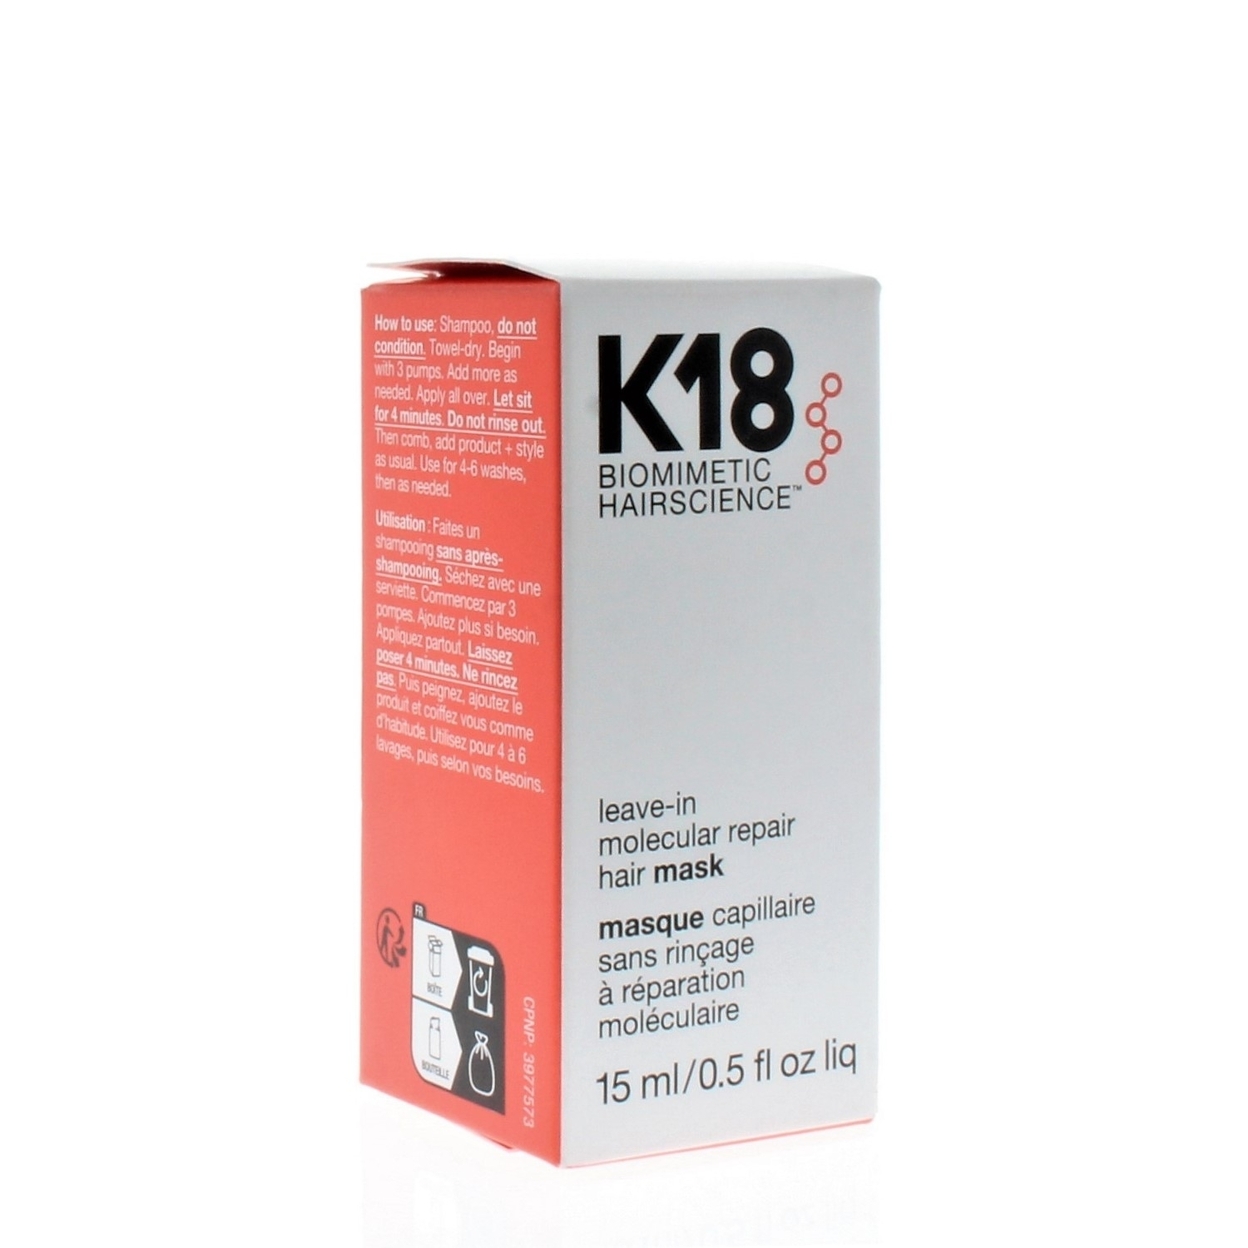 K18 Biomimetic Hairscience Leave-In Molecular Repair Hair Mask 0.5oz/15ml